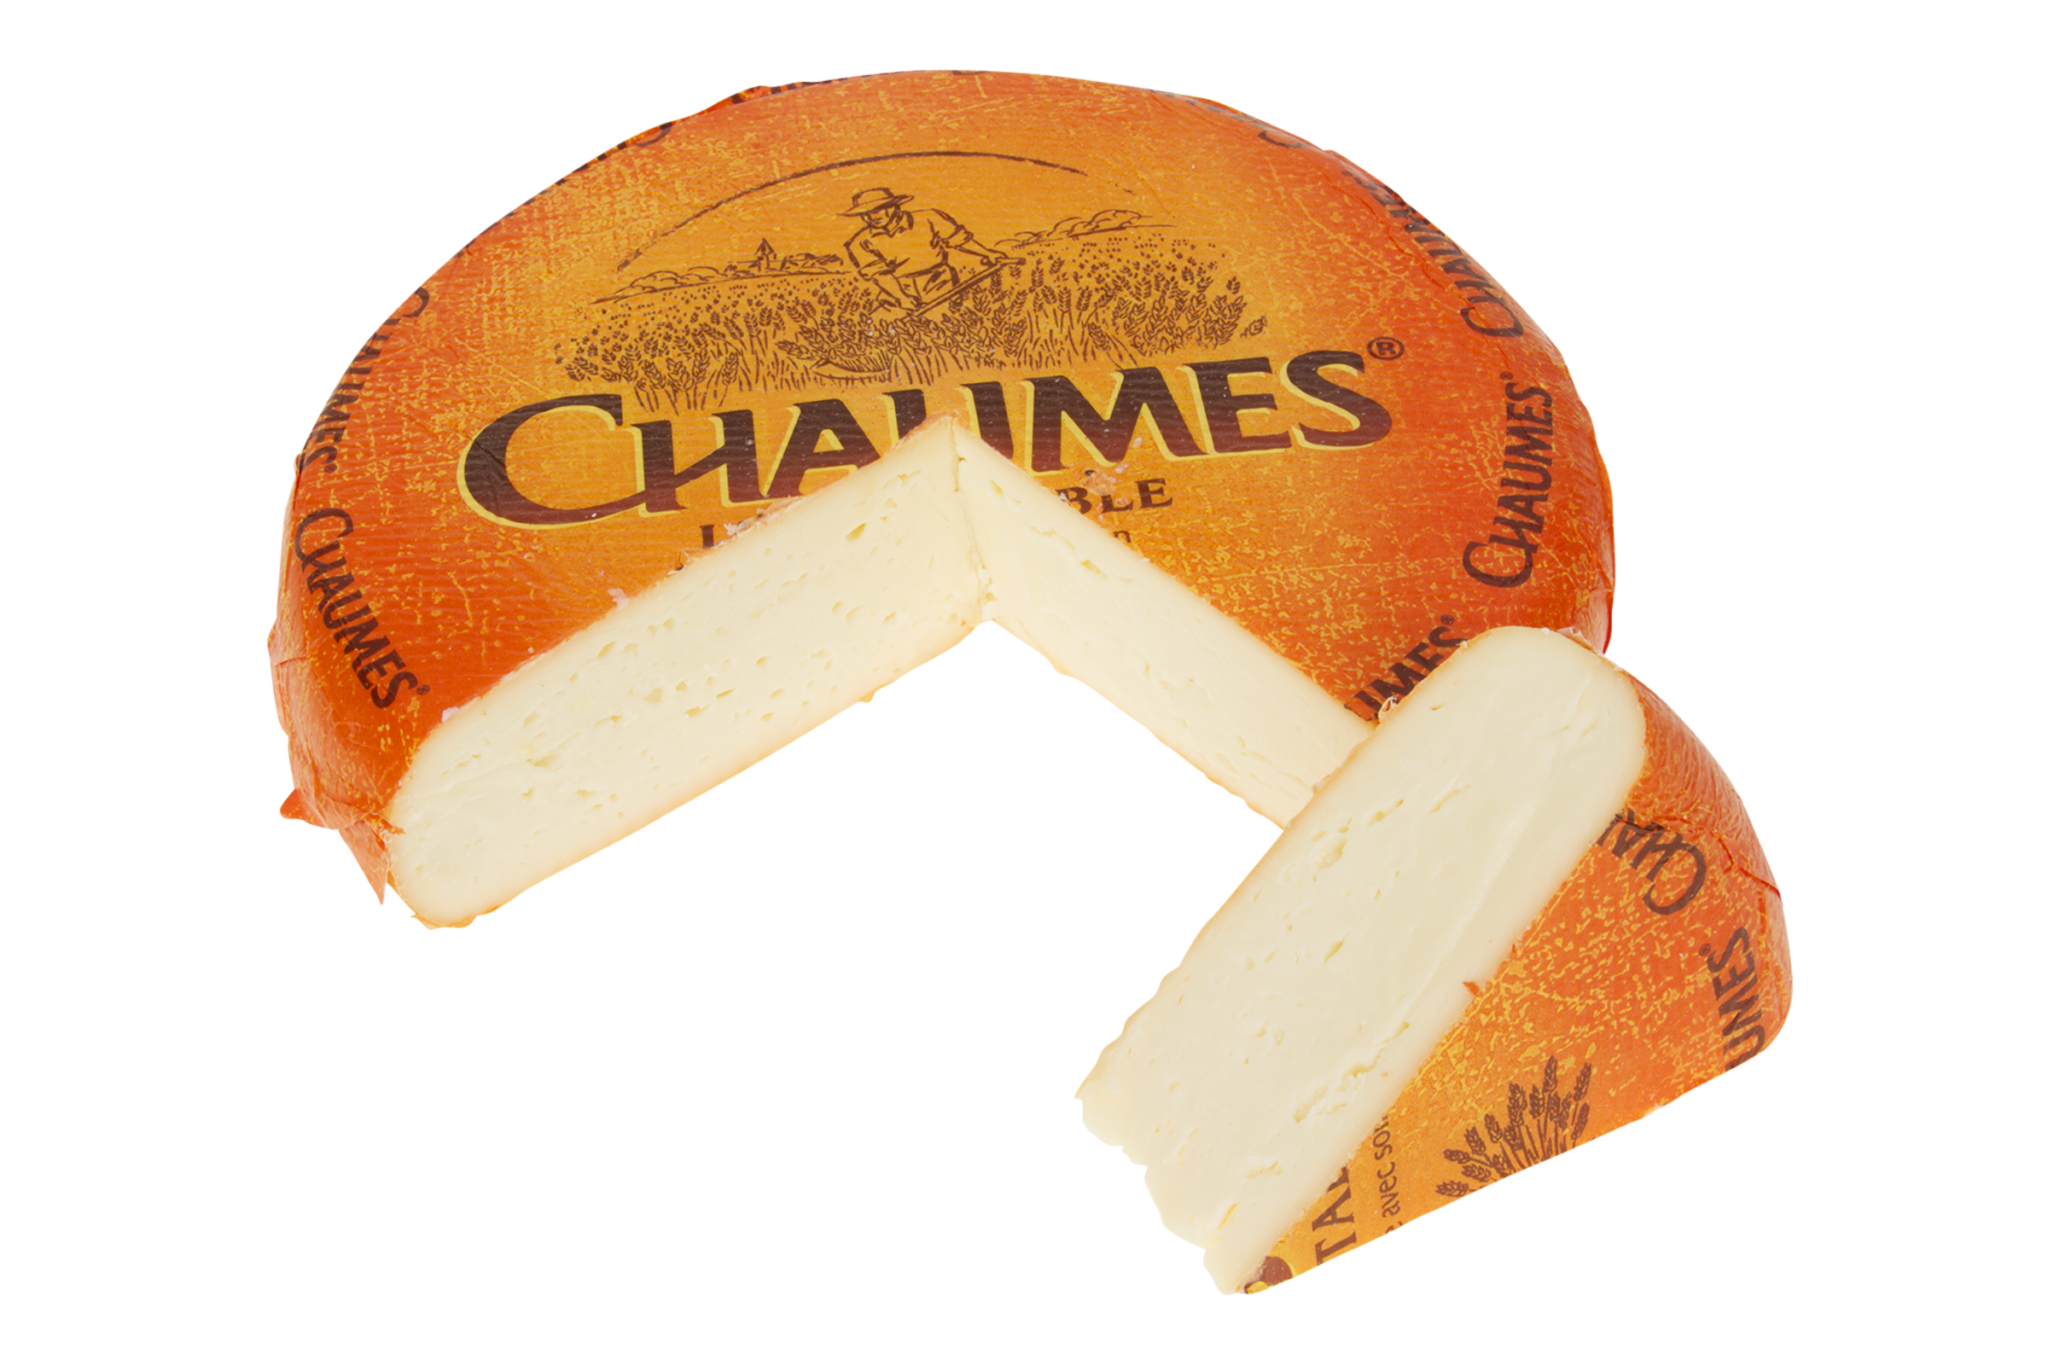 ik klaag bloem Gom Chaumes | Franse kaas met rode korst | Kazen | Kaas.nl